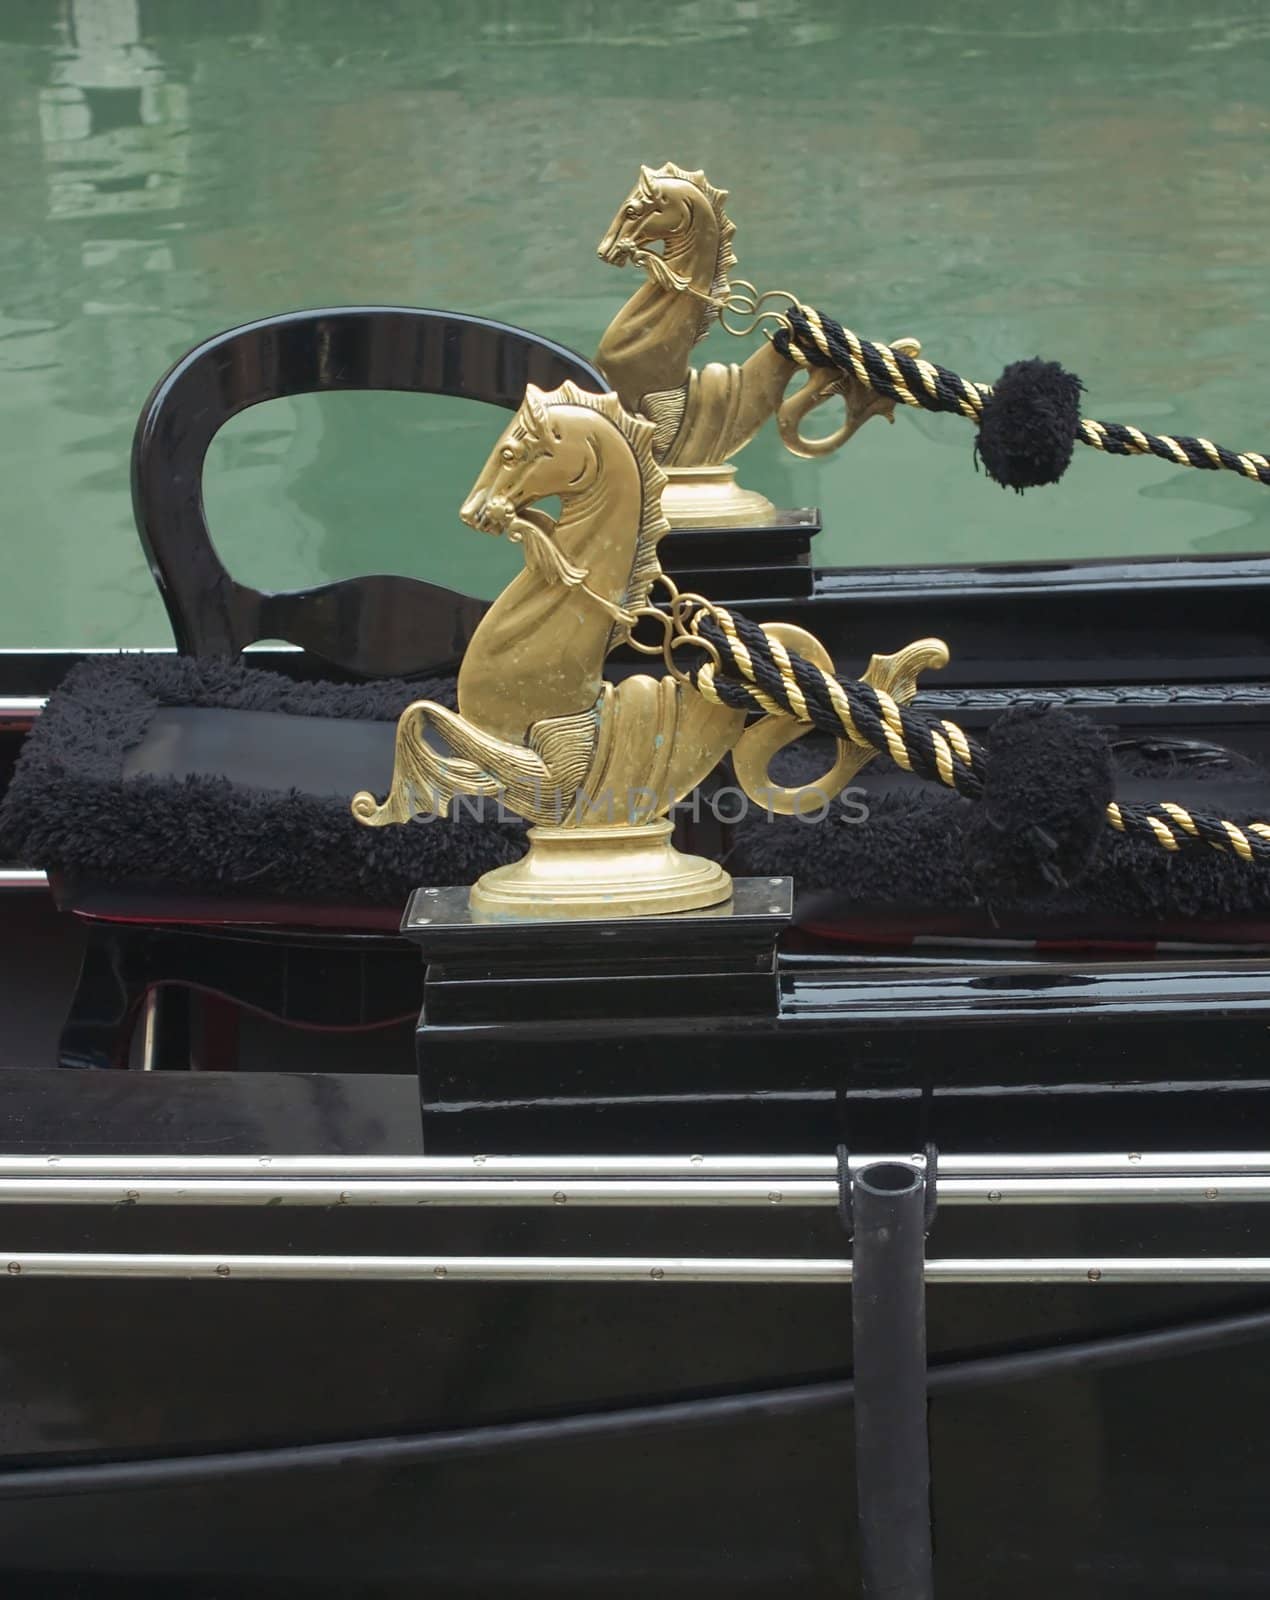 The decoration of Venetian gondolas by glassbear